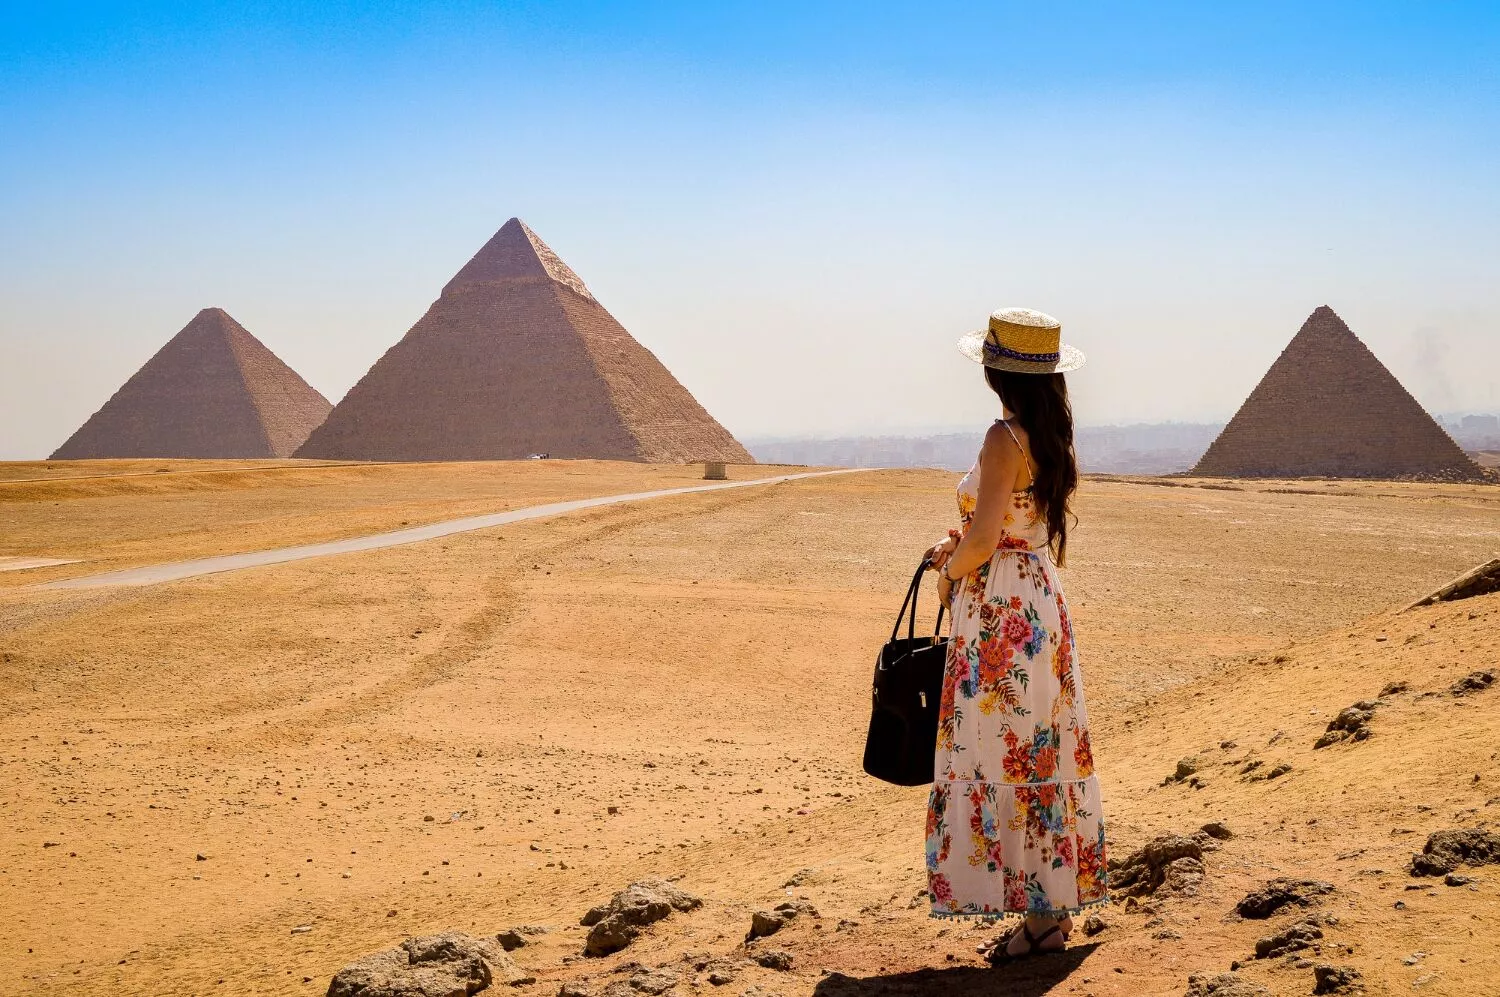 STOP A: Pyramids of Giza